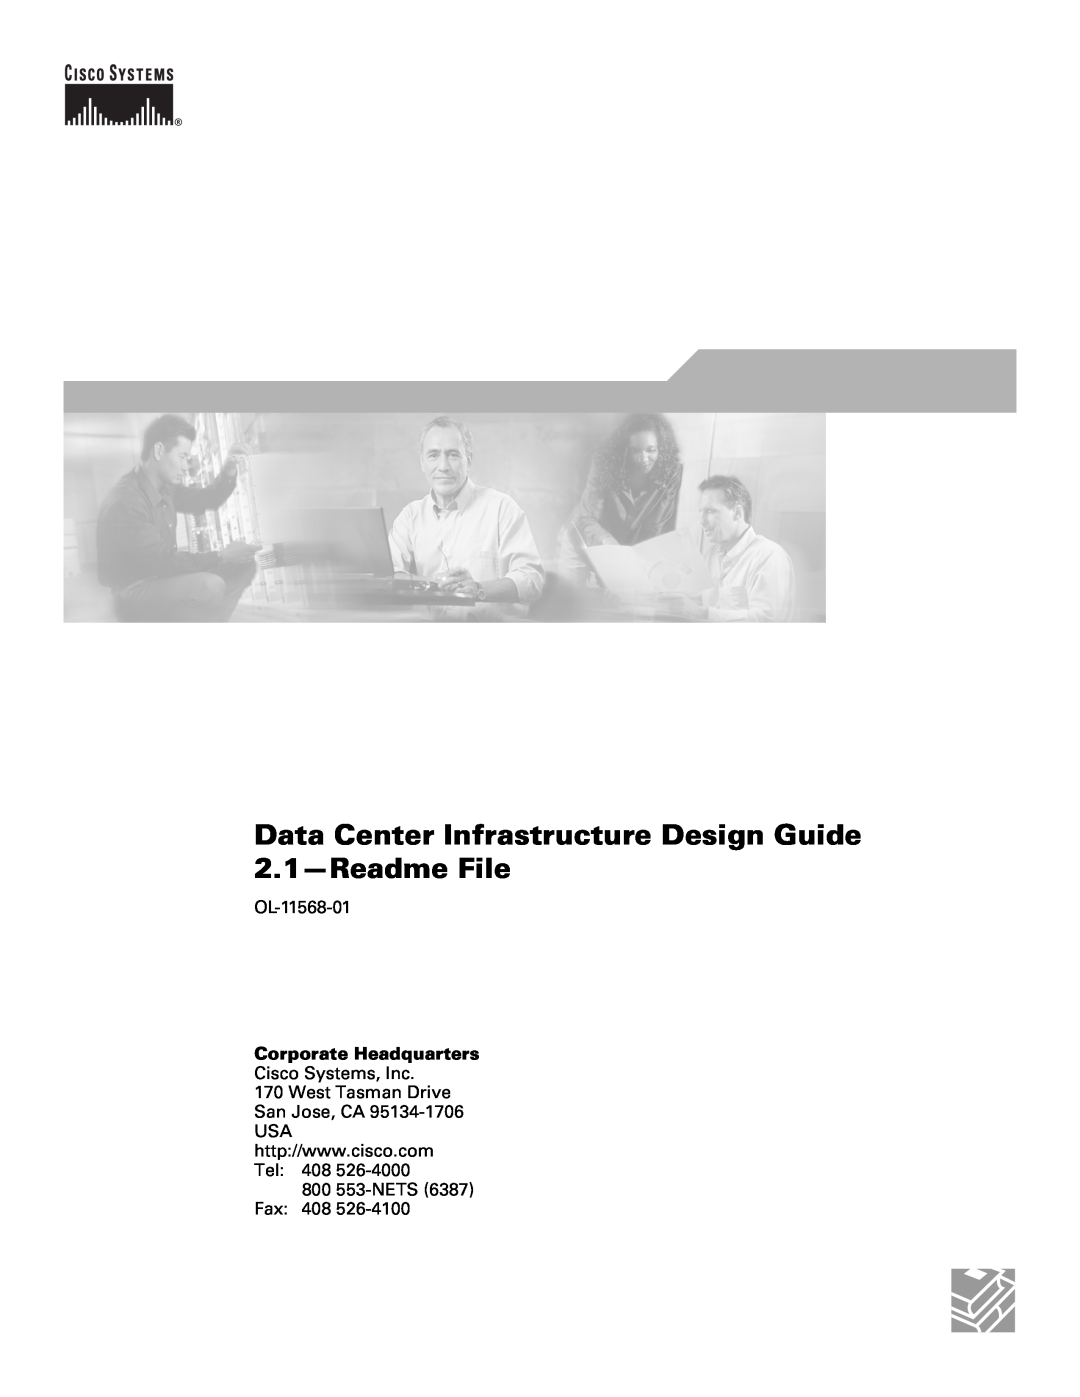 Cisco Systems OL-11568-01 manual Corporate Headquarters, Data Center Infrastructure Design Guide 2.1-Readme File 